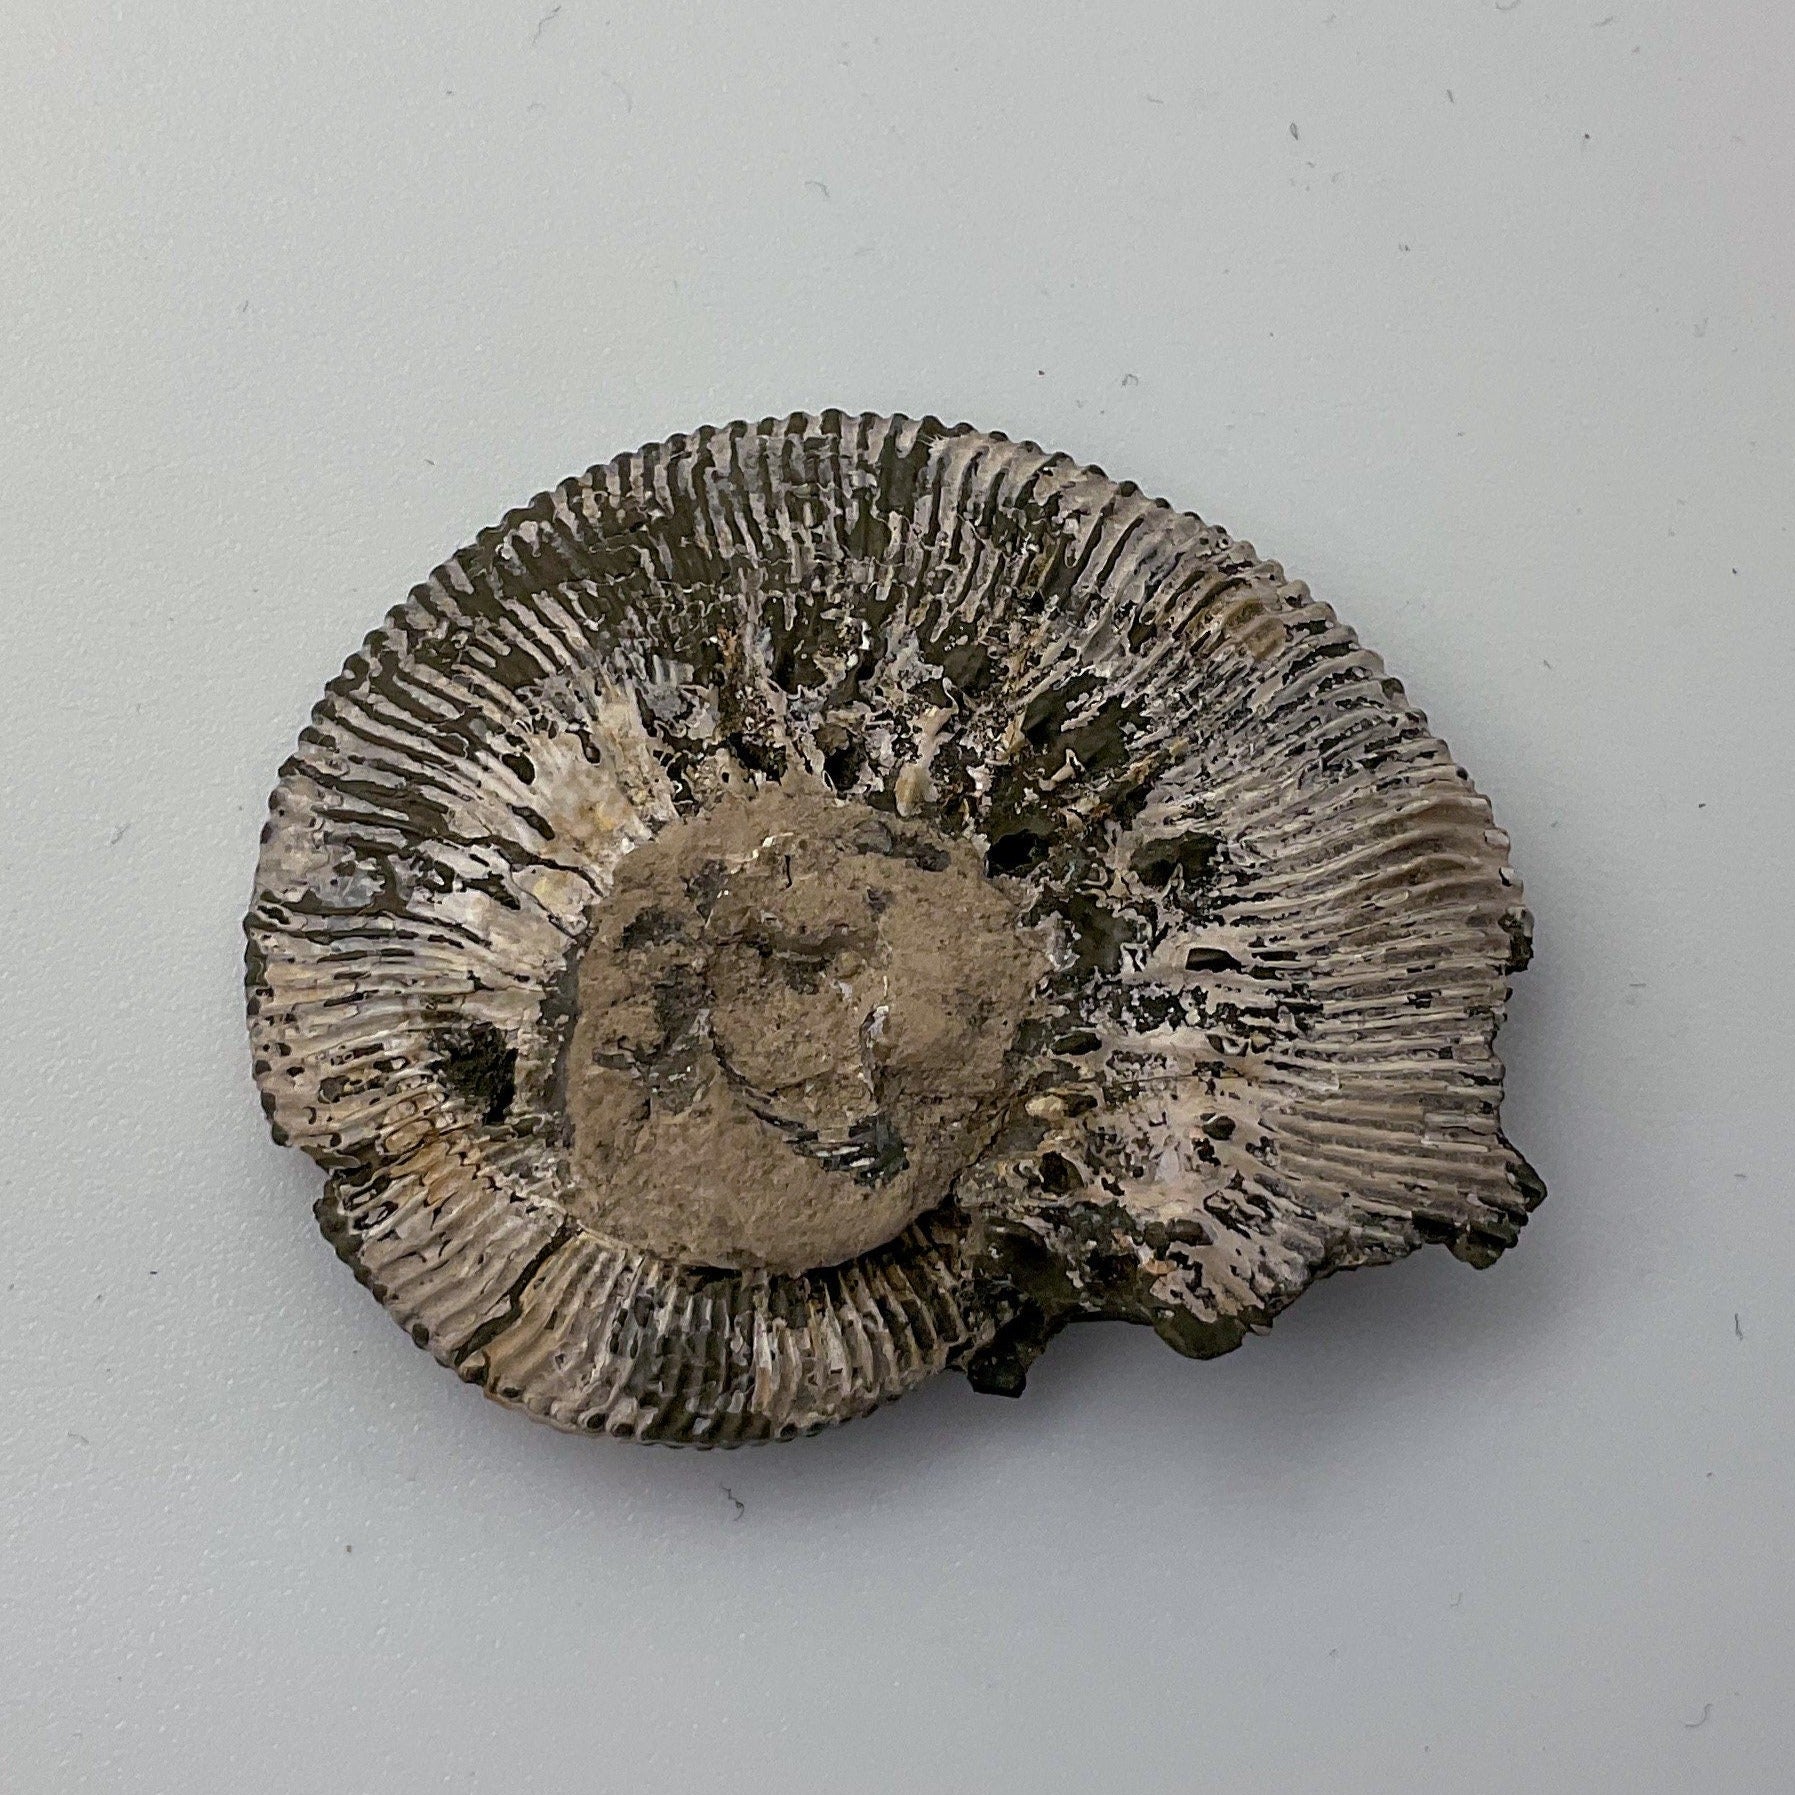 Pyritized Ammonite Half Specimen